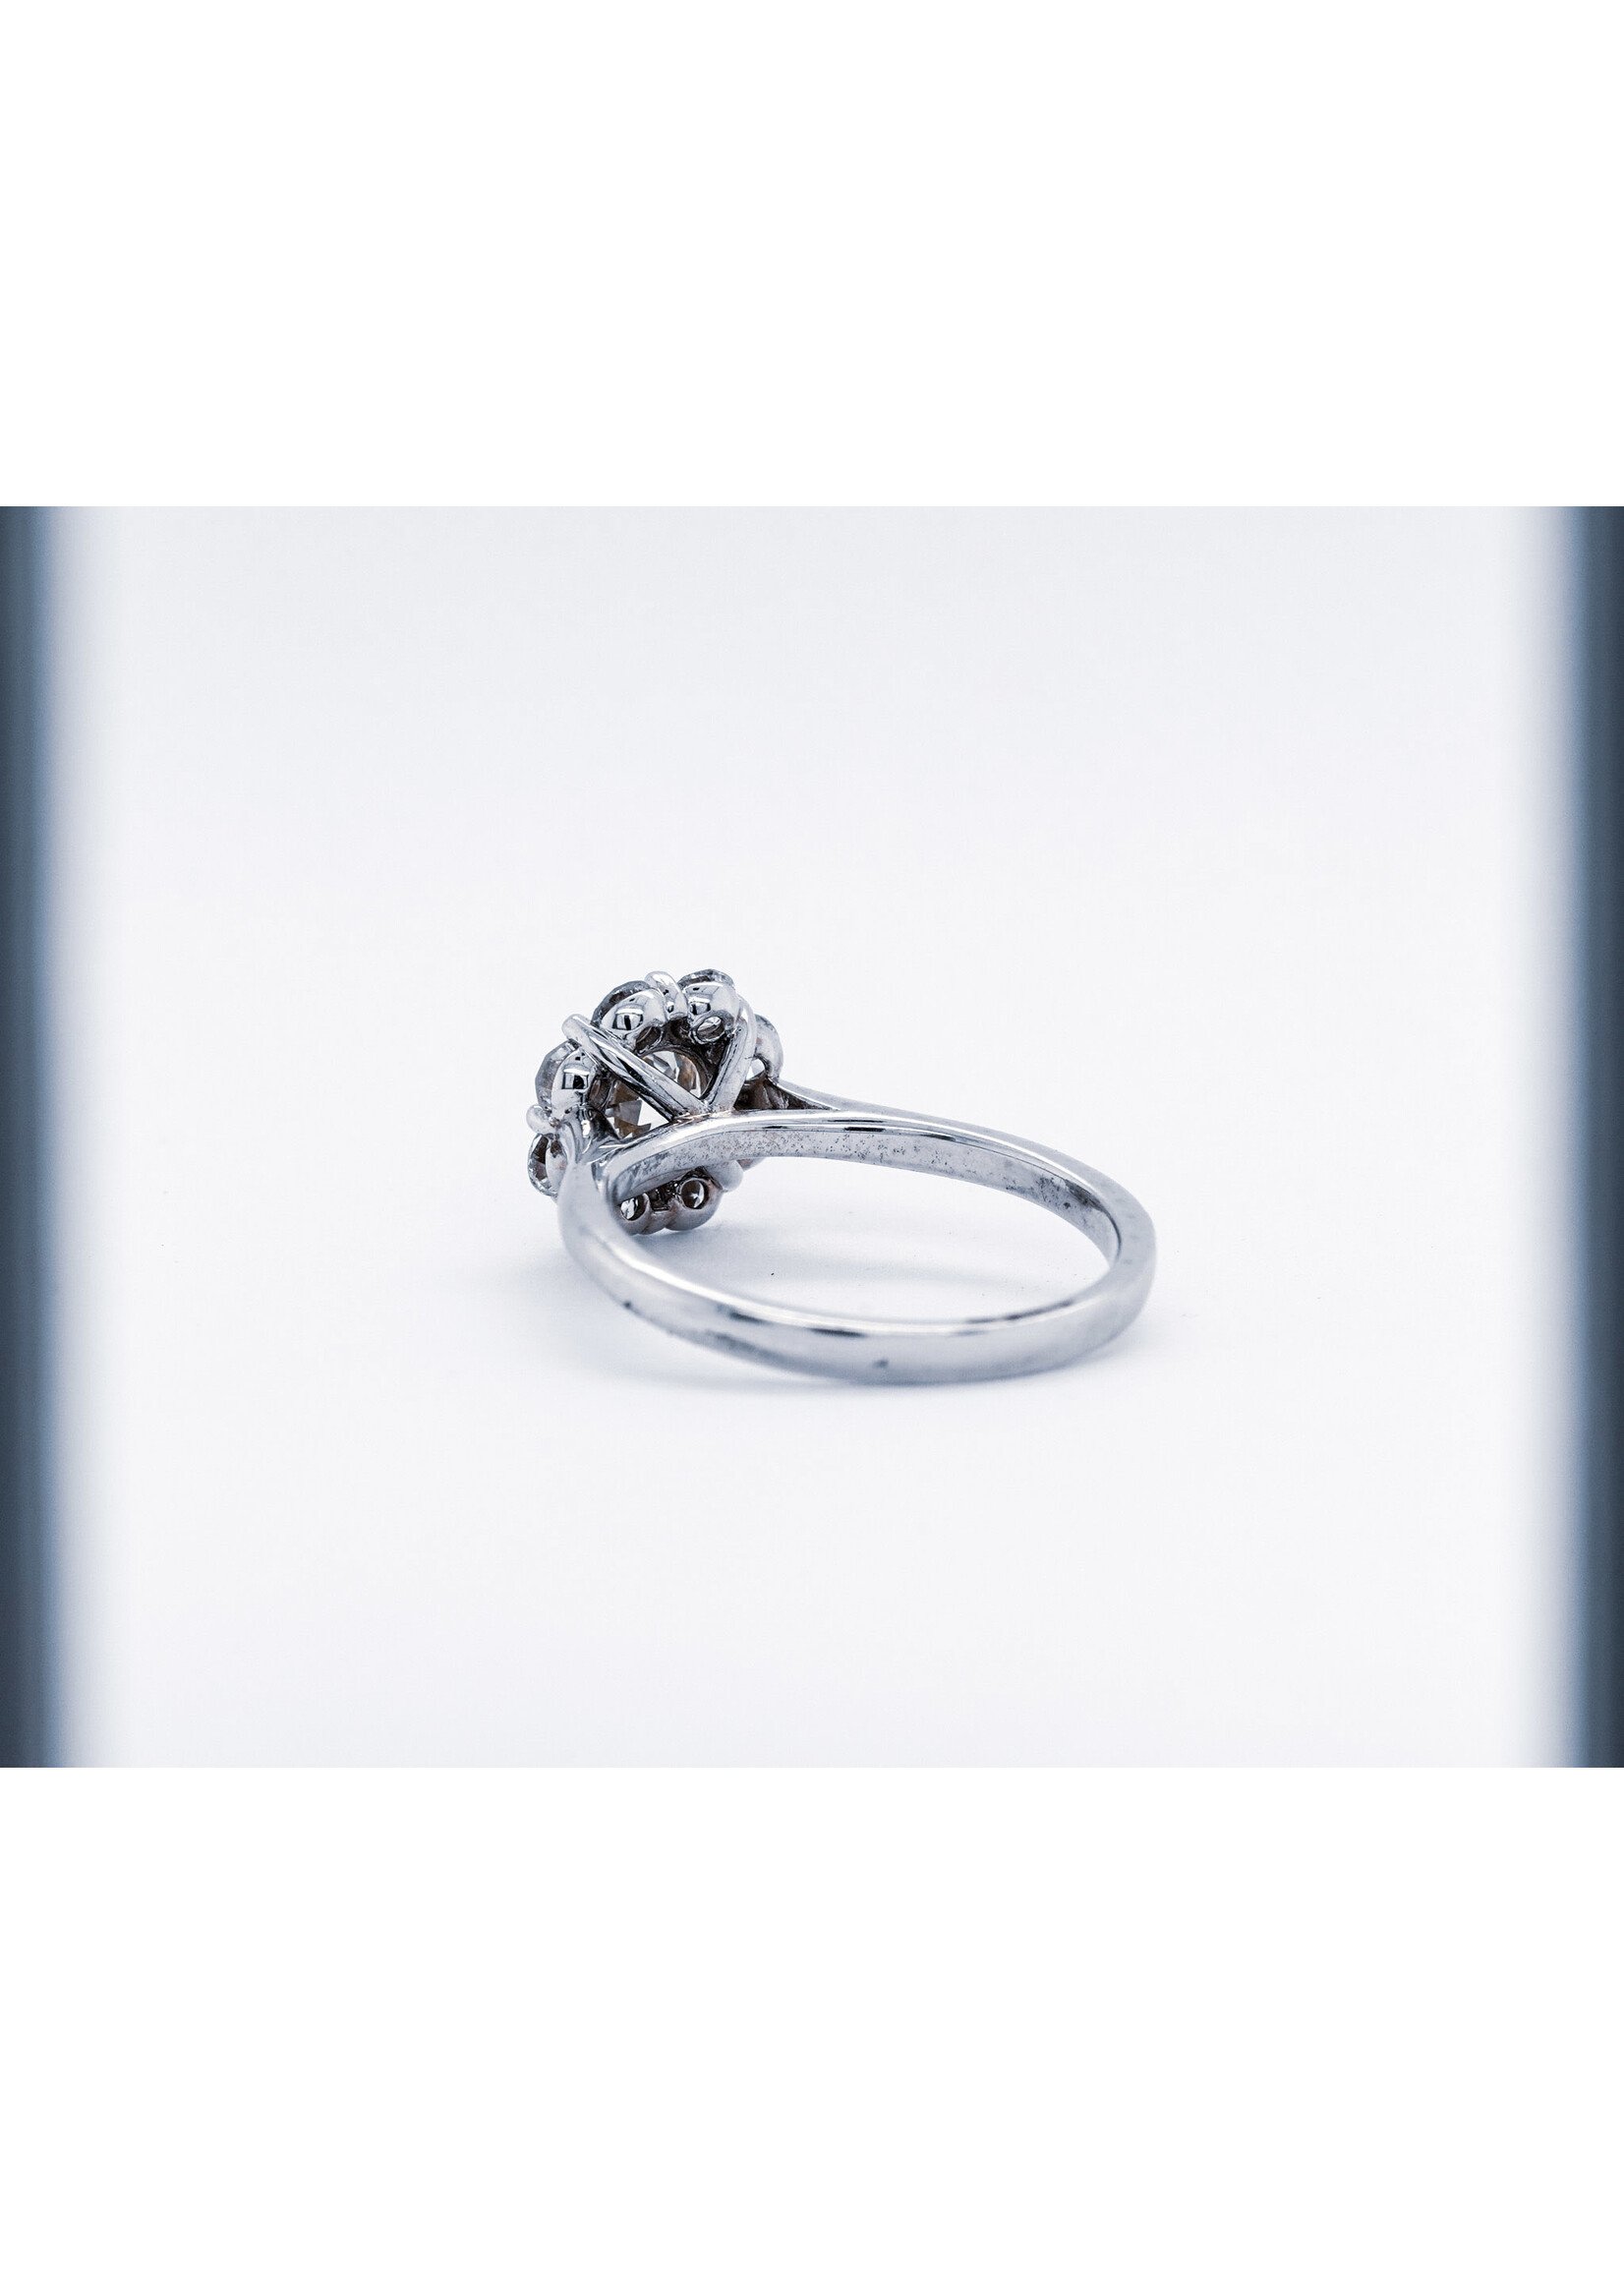 14KW 3.54g 2.00CTW (.85ctr) L/VS2 Old European Cut Diamond Halo Engagement Ring (size 7)